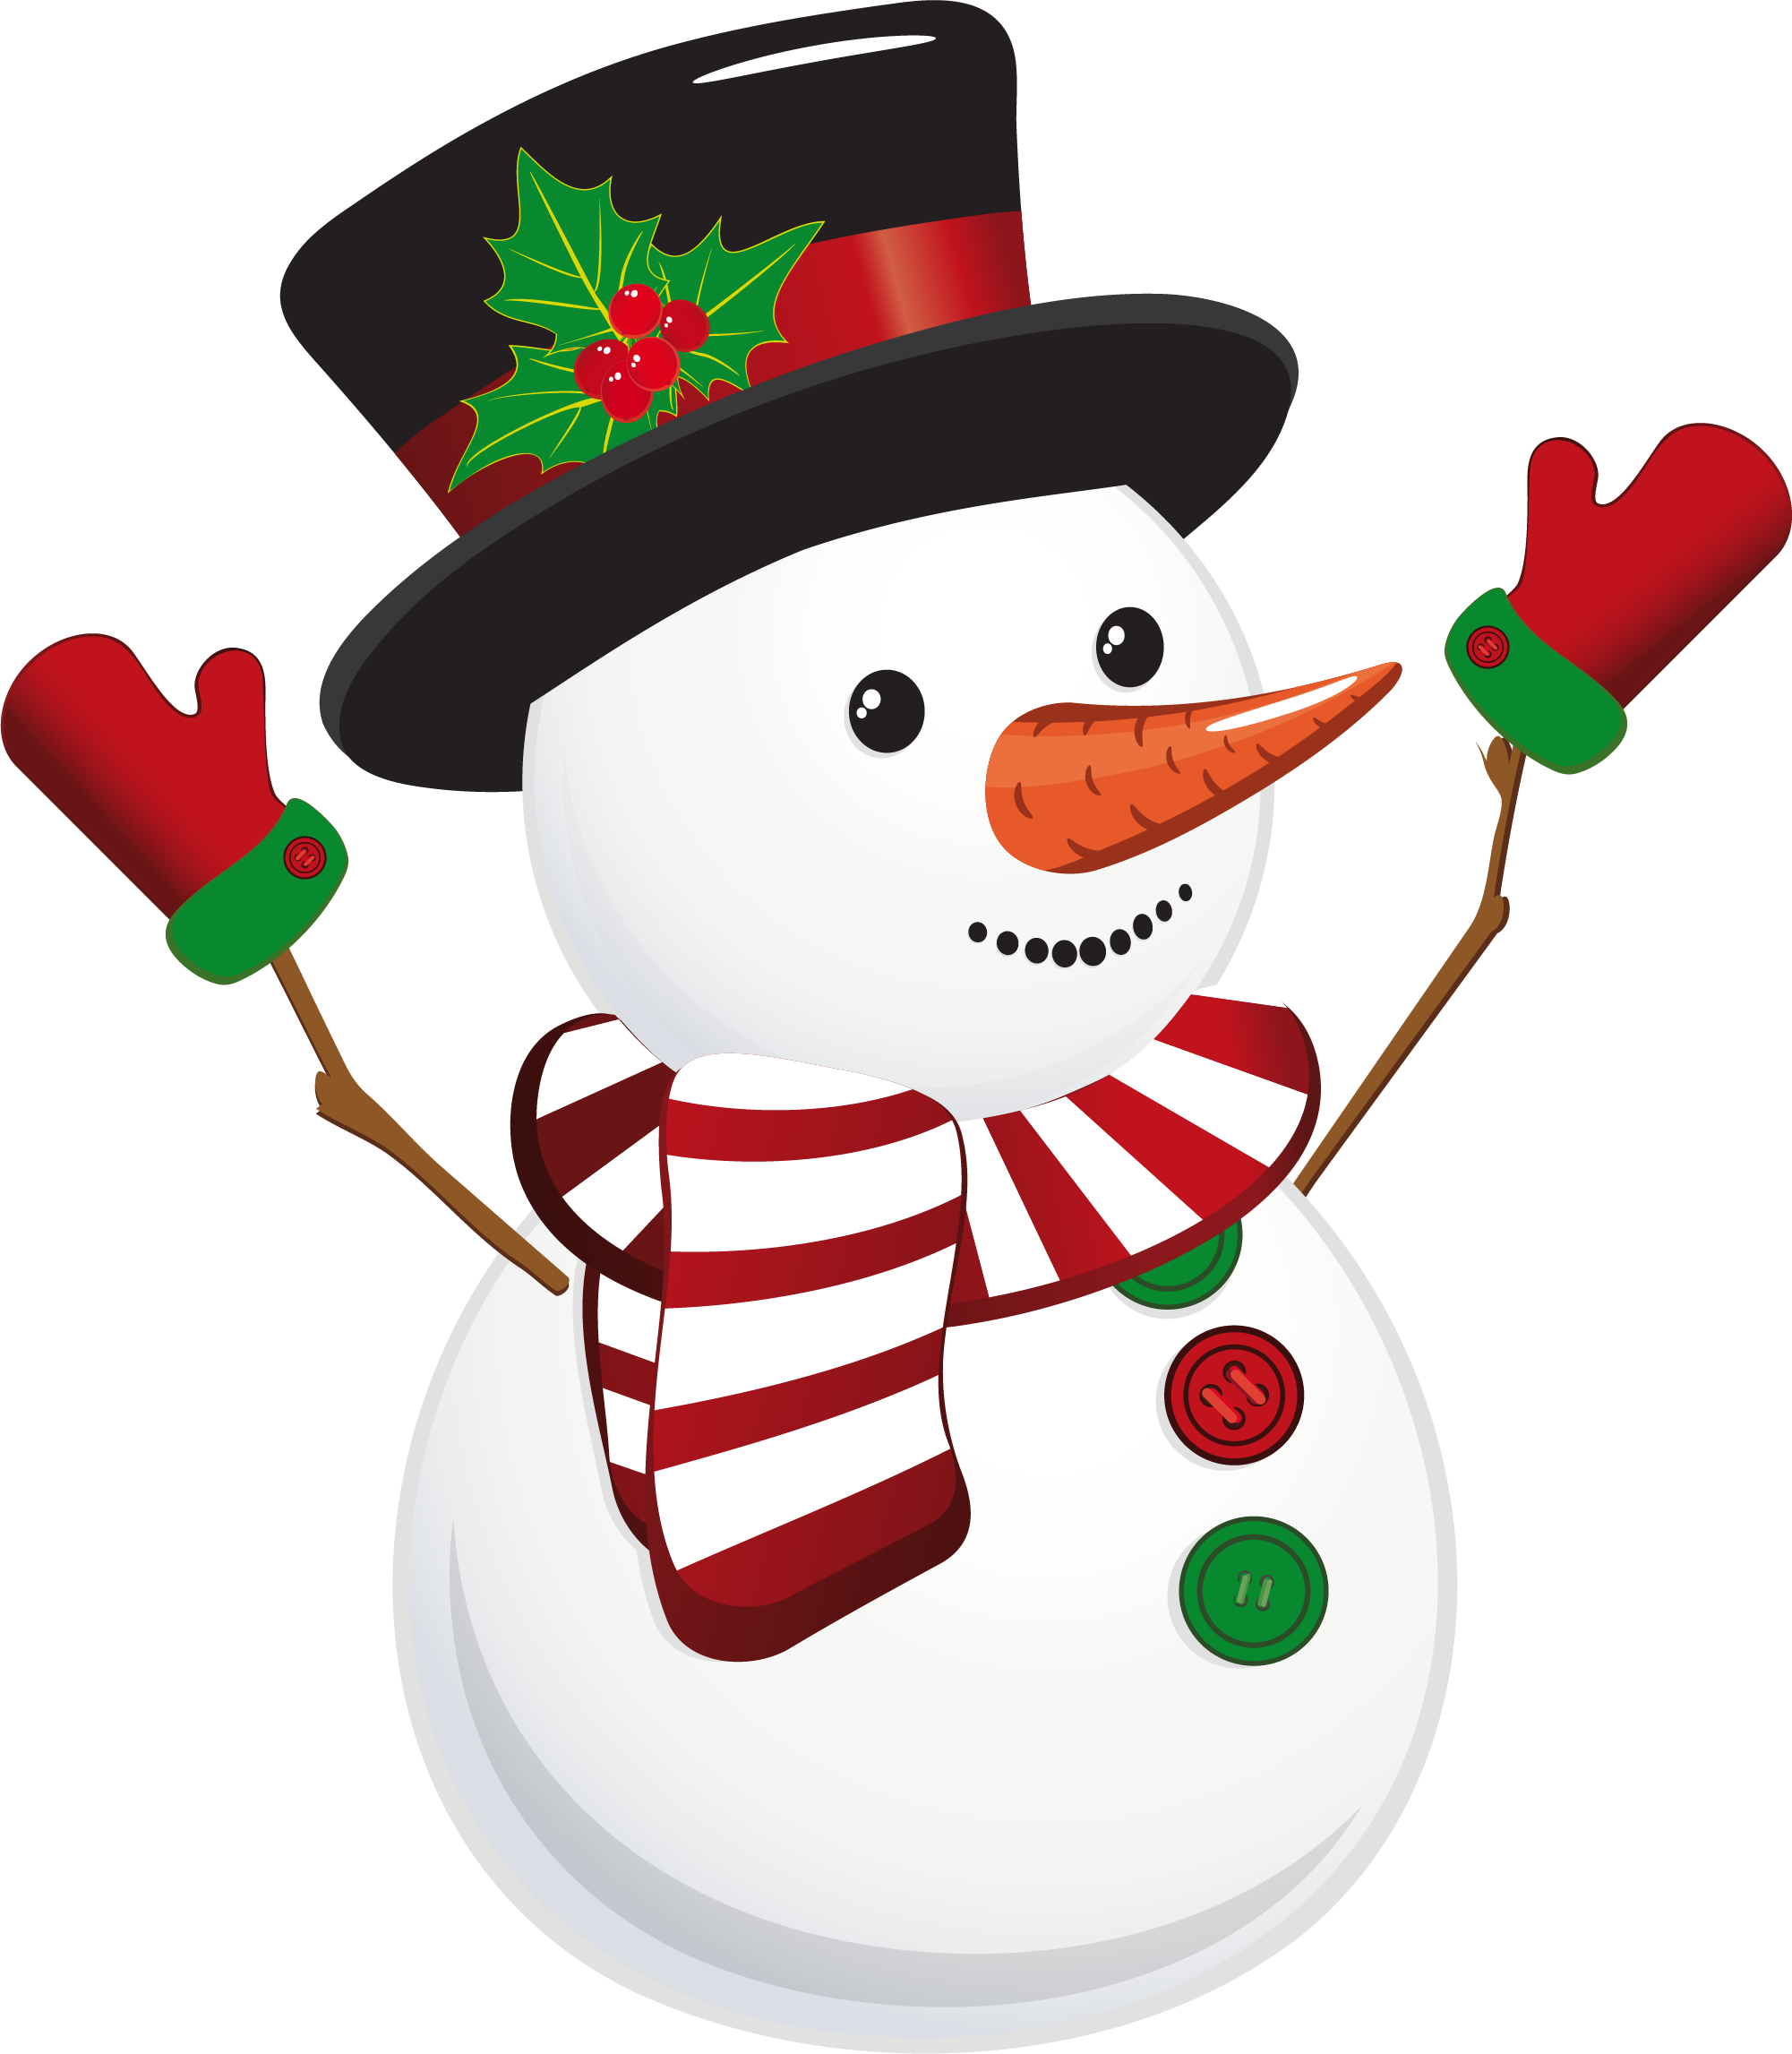 Download Snowman Claus Cartoon Santa White Christmas Card HQ PNG Image | FreePNGImg